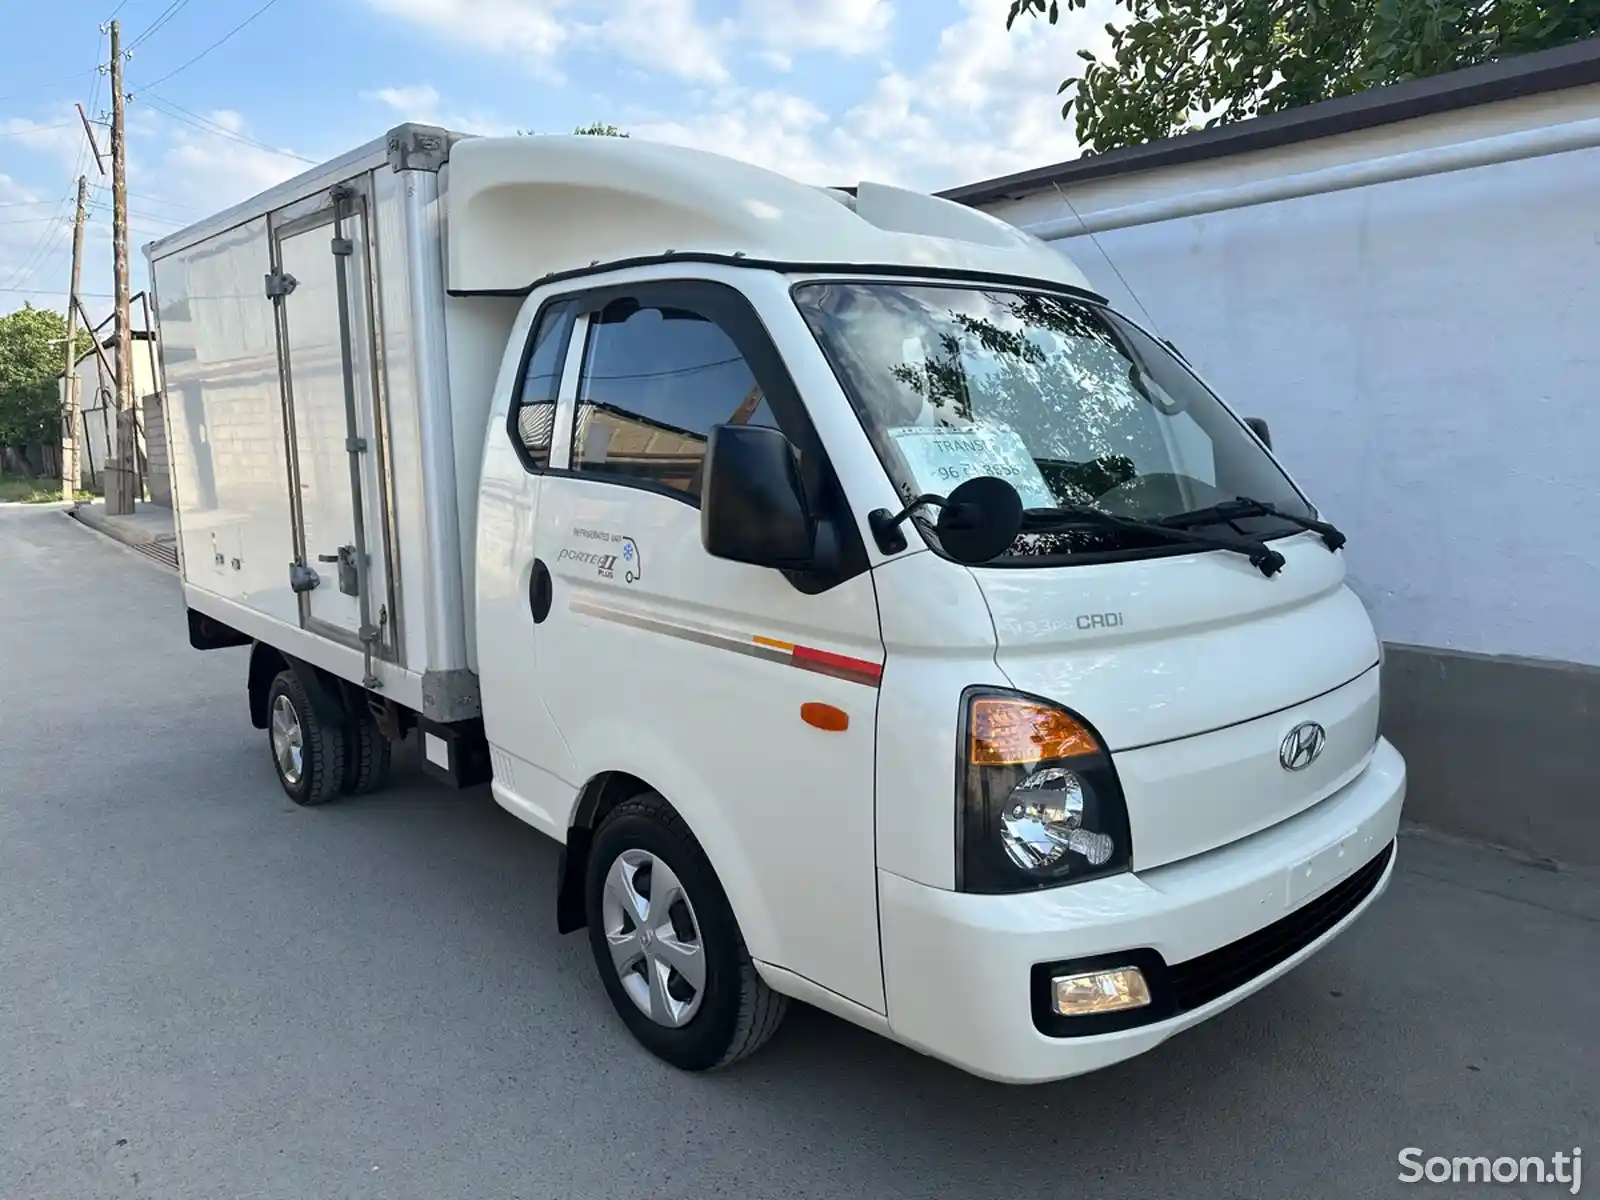 Фургон Hyundai Refrigerator van porter II plus, 2016-2